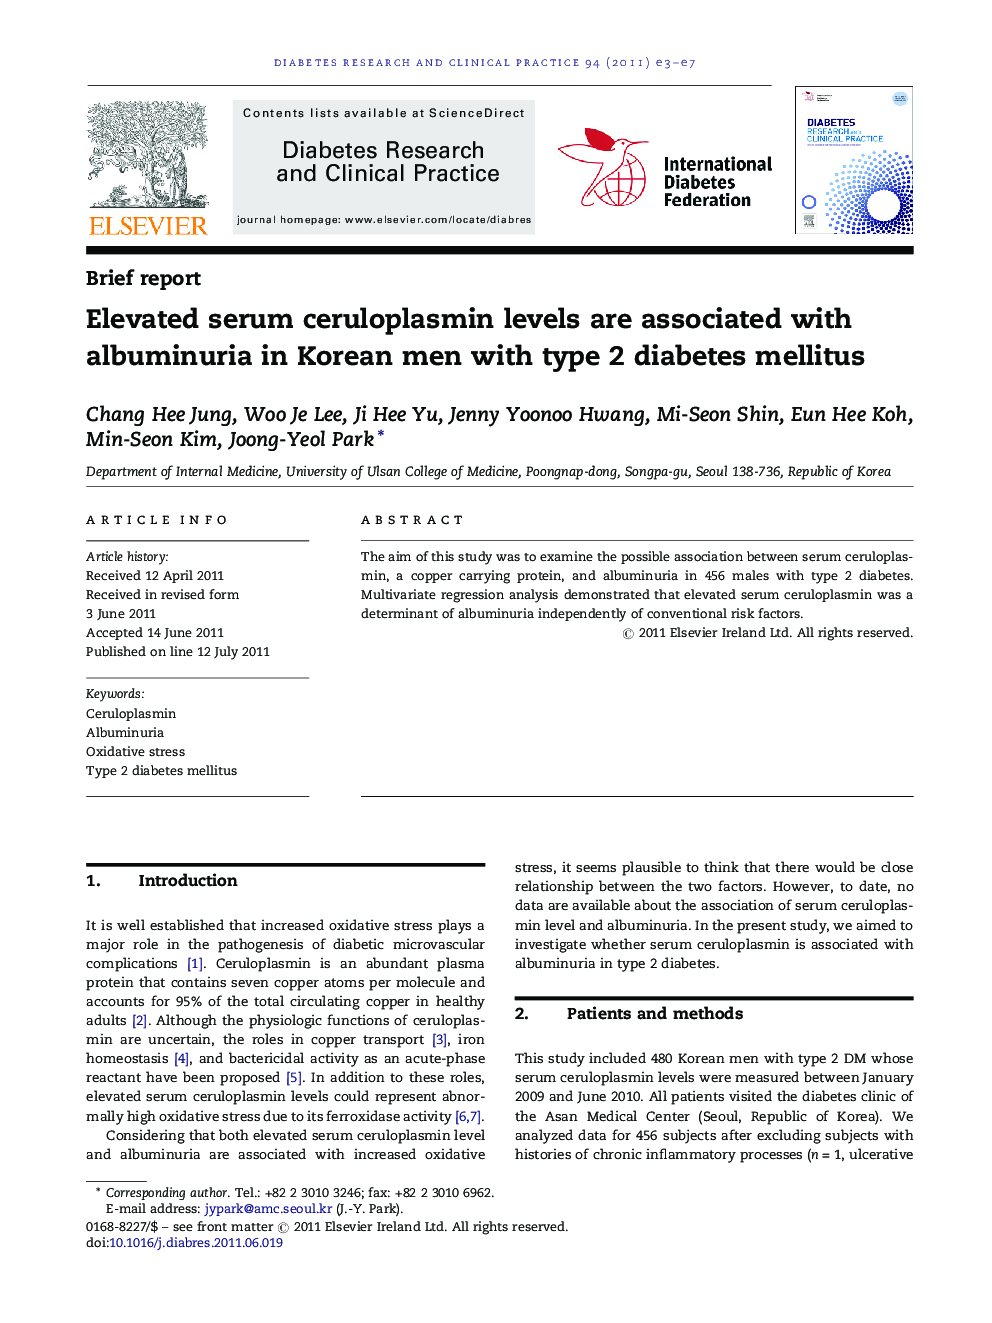 Elevated serum ceruloplasmin levels are associated with albuminuria in Korean men with type 2 diabetes mellitus